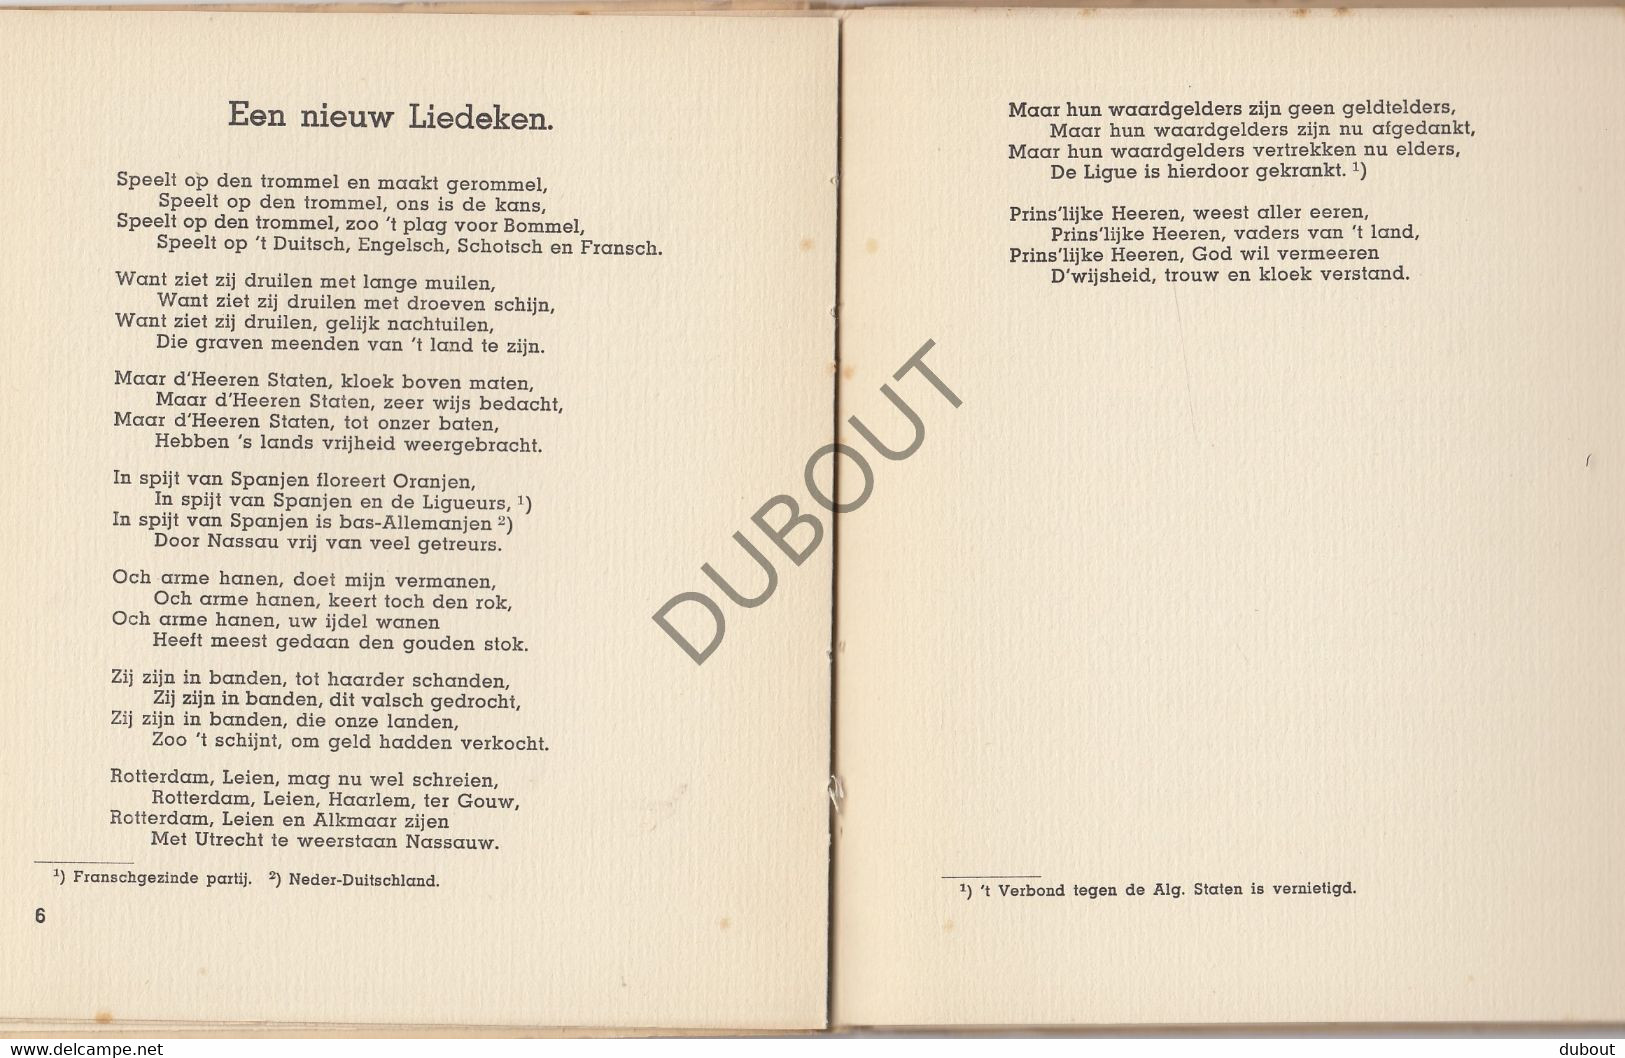 Literatuur: Geuzenliederen, Vive Le Geus! M. Beversluis  (V1671) - Poesia